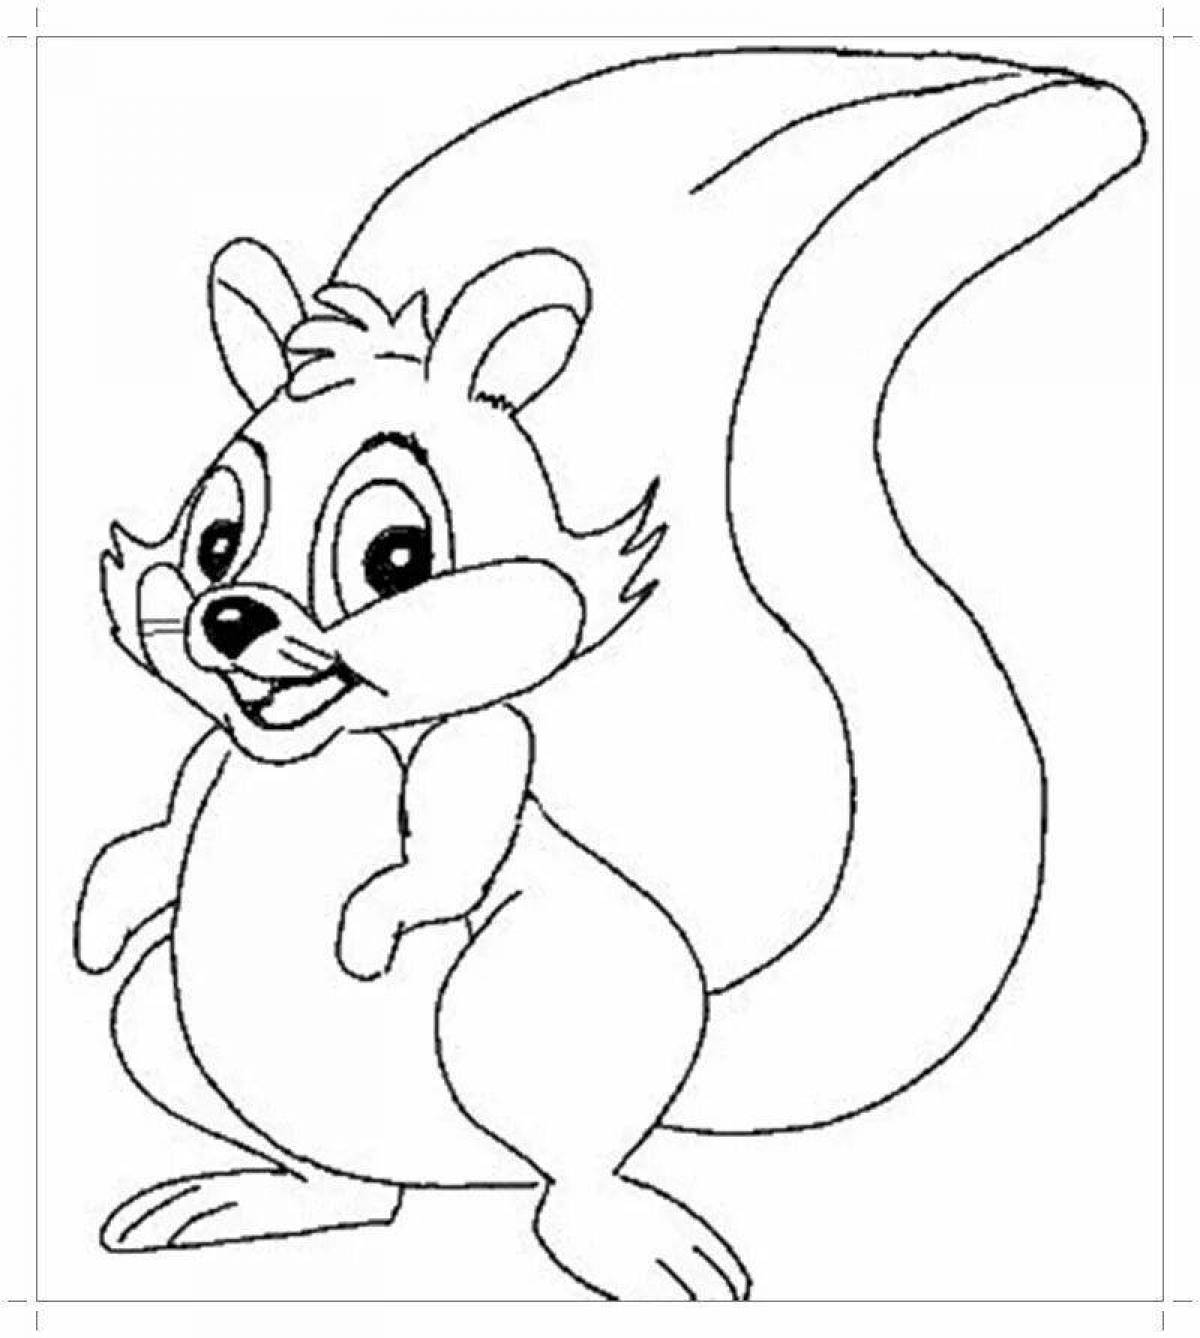 Fun coloring squirrel drawing